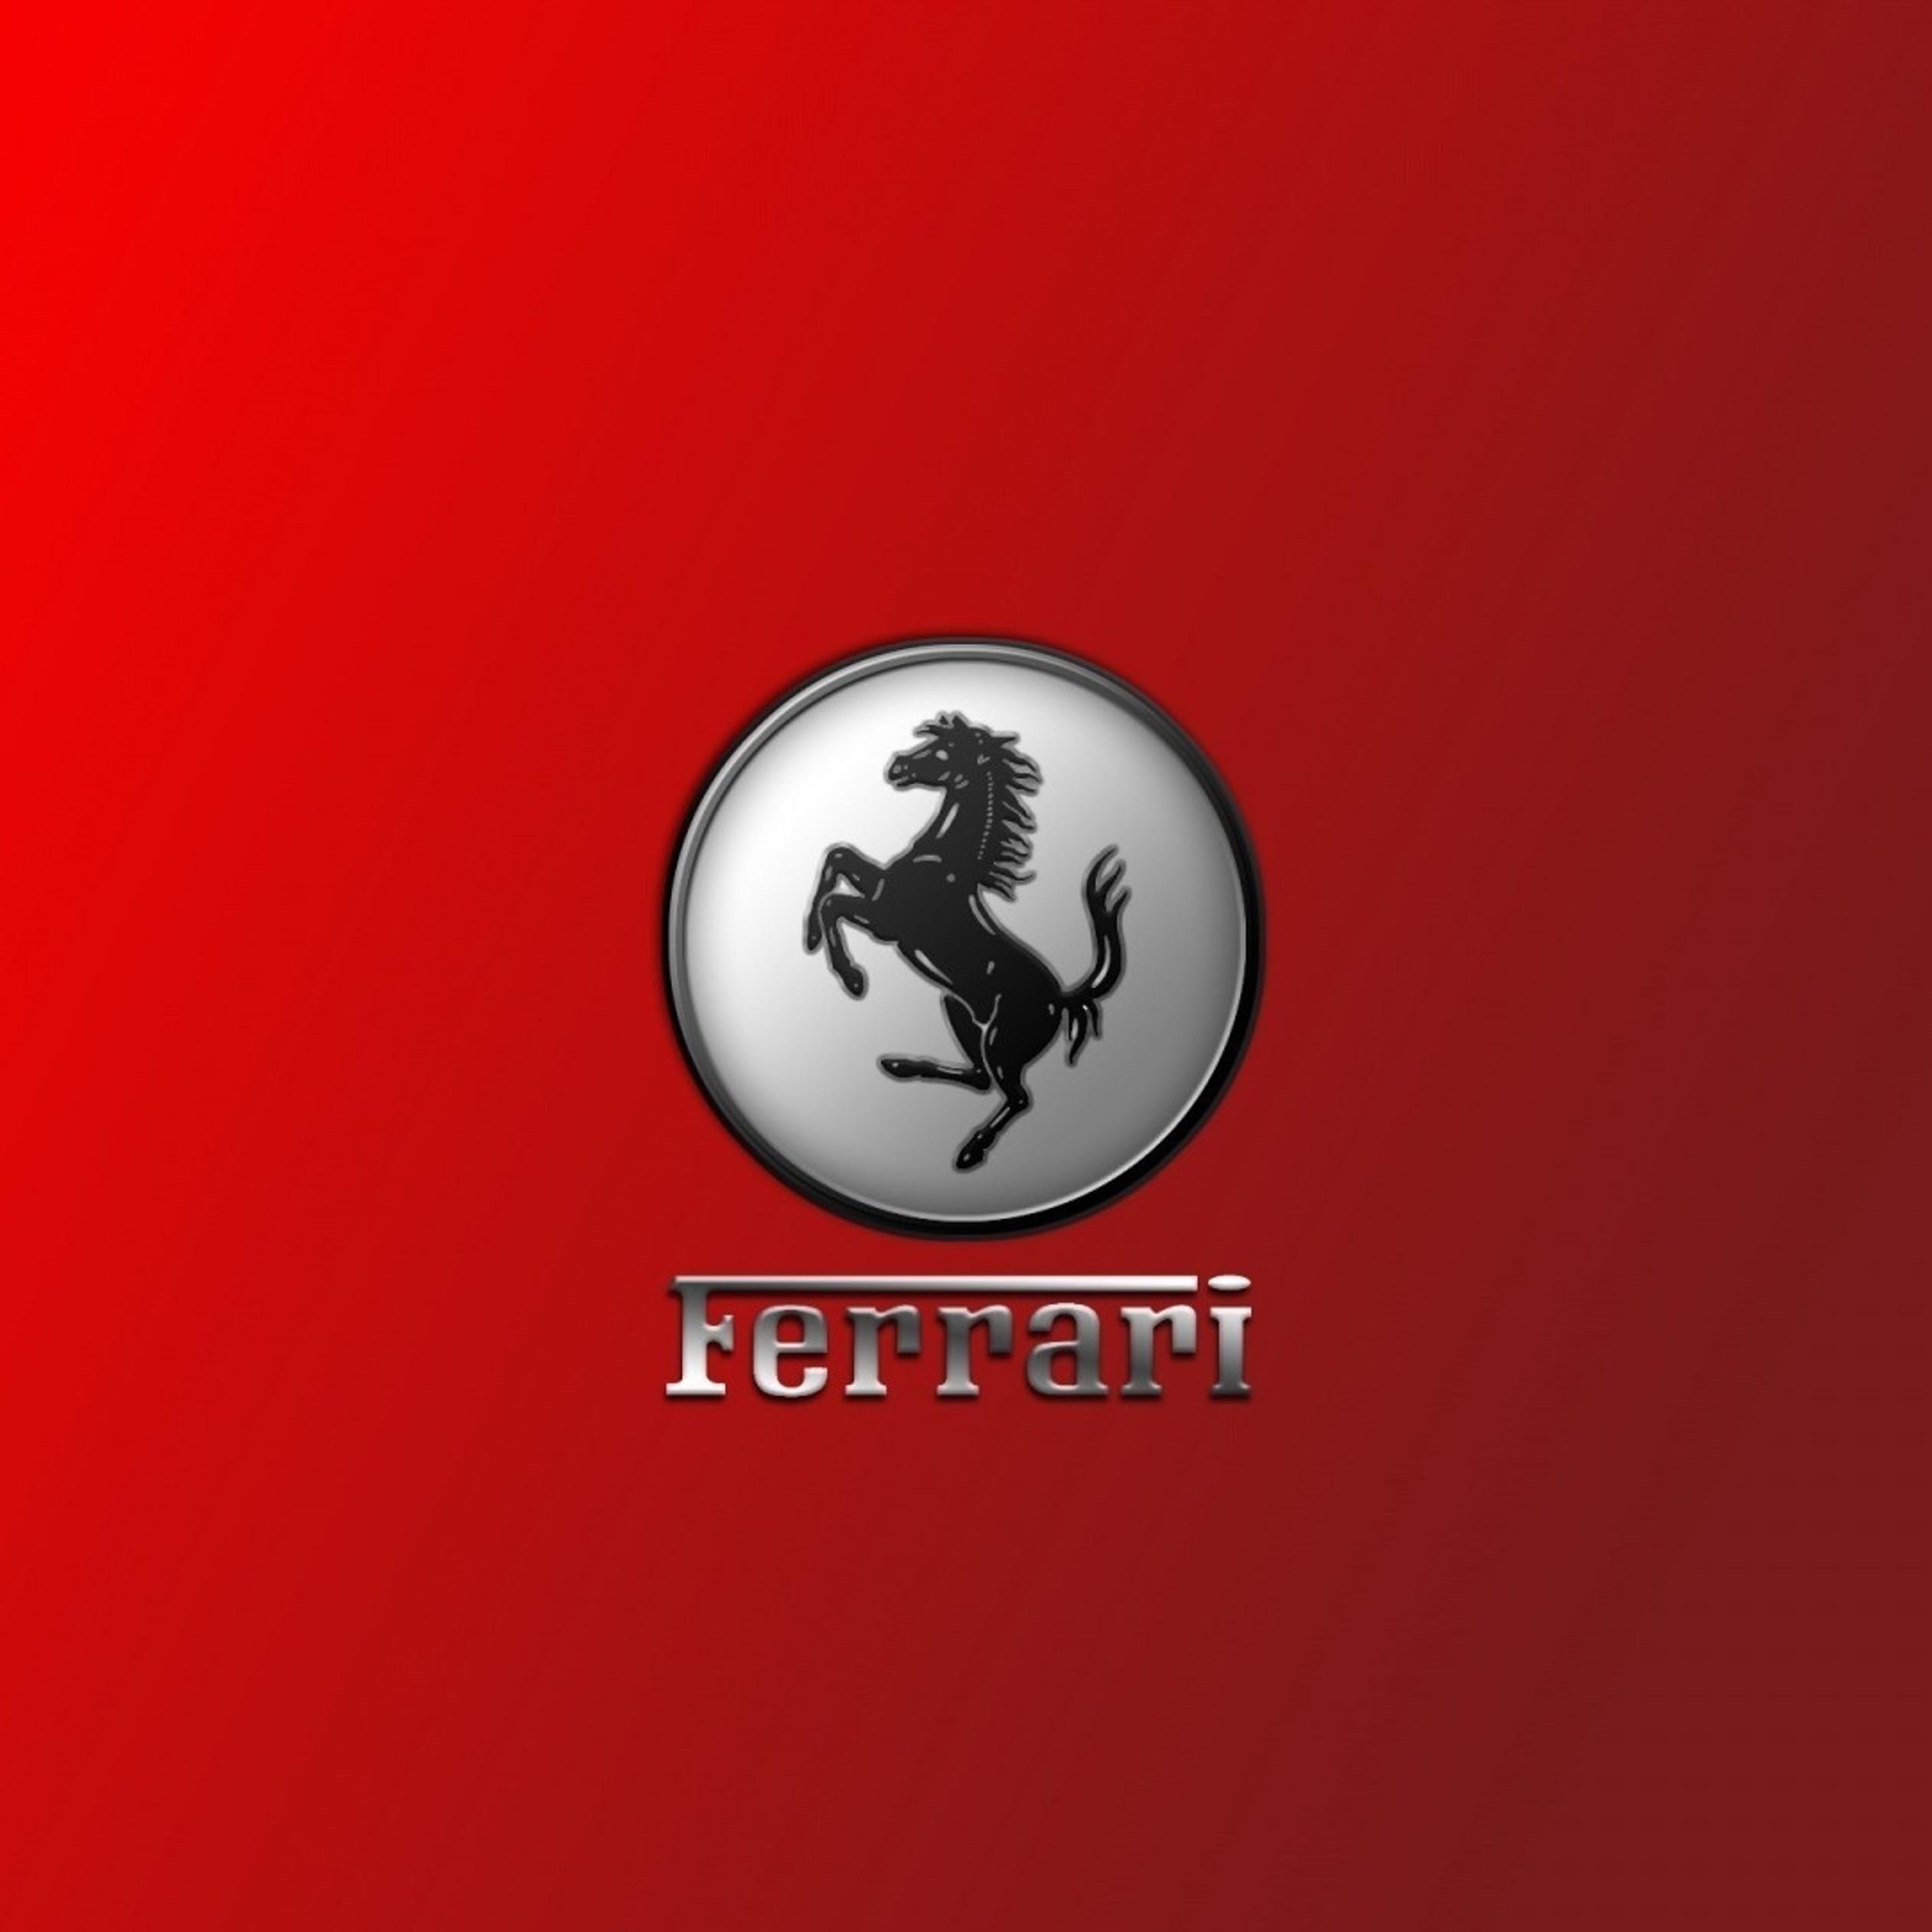 Ferrari emblem on a red background